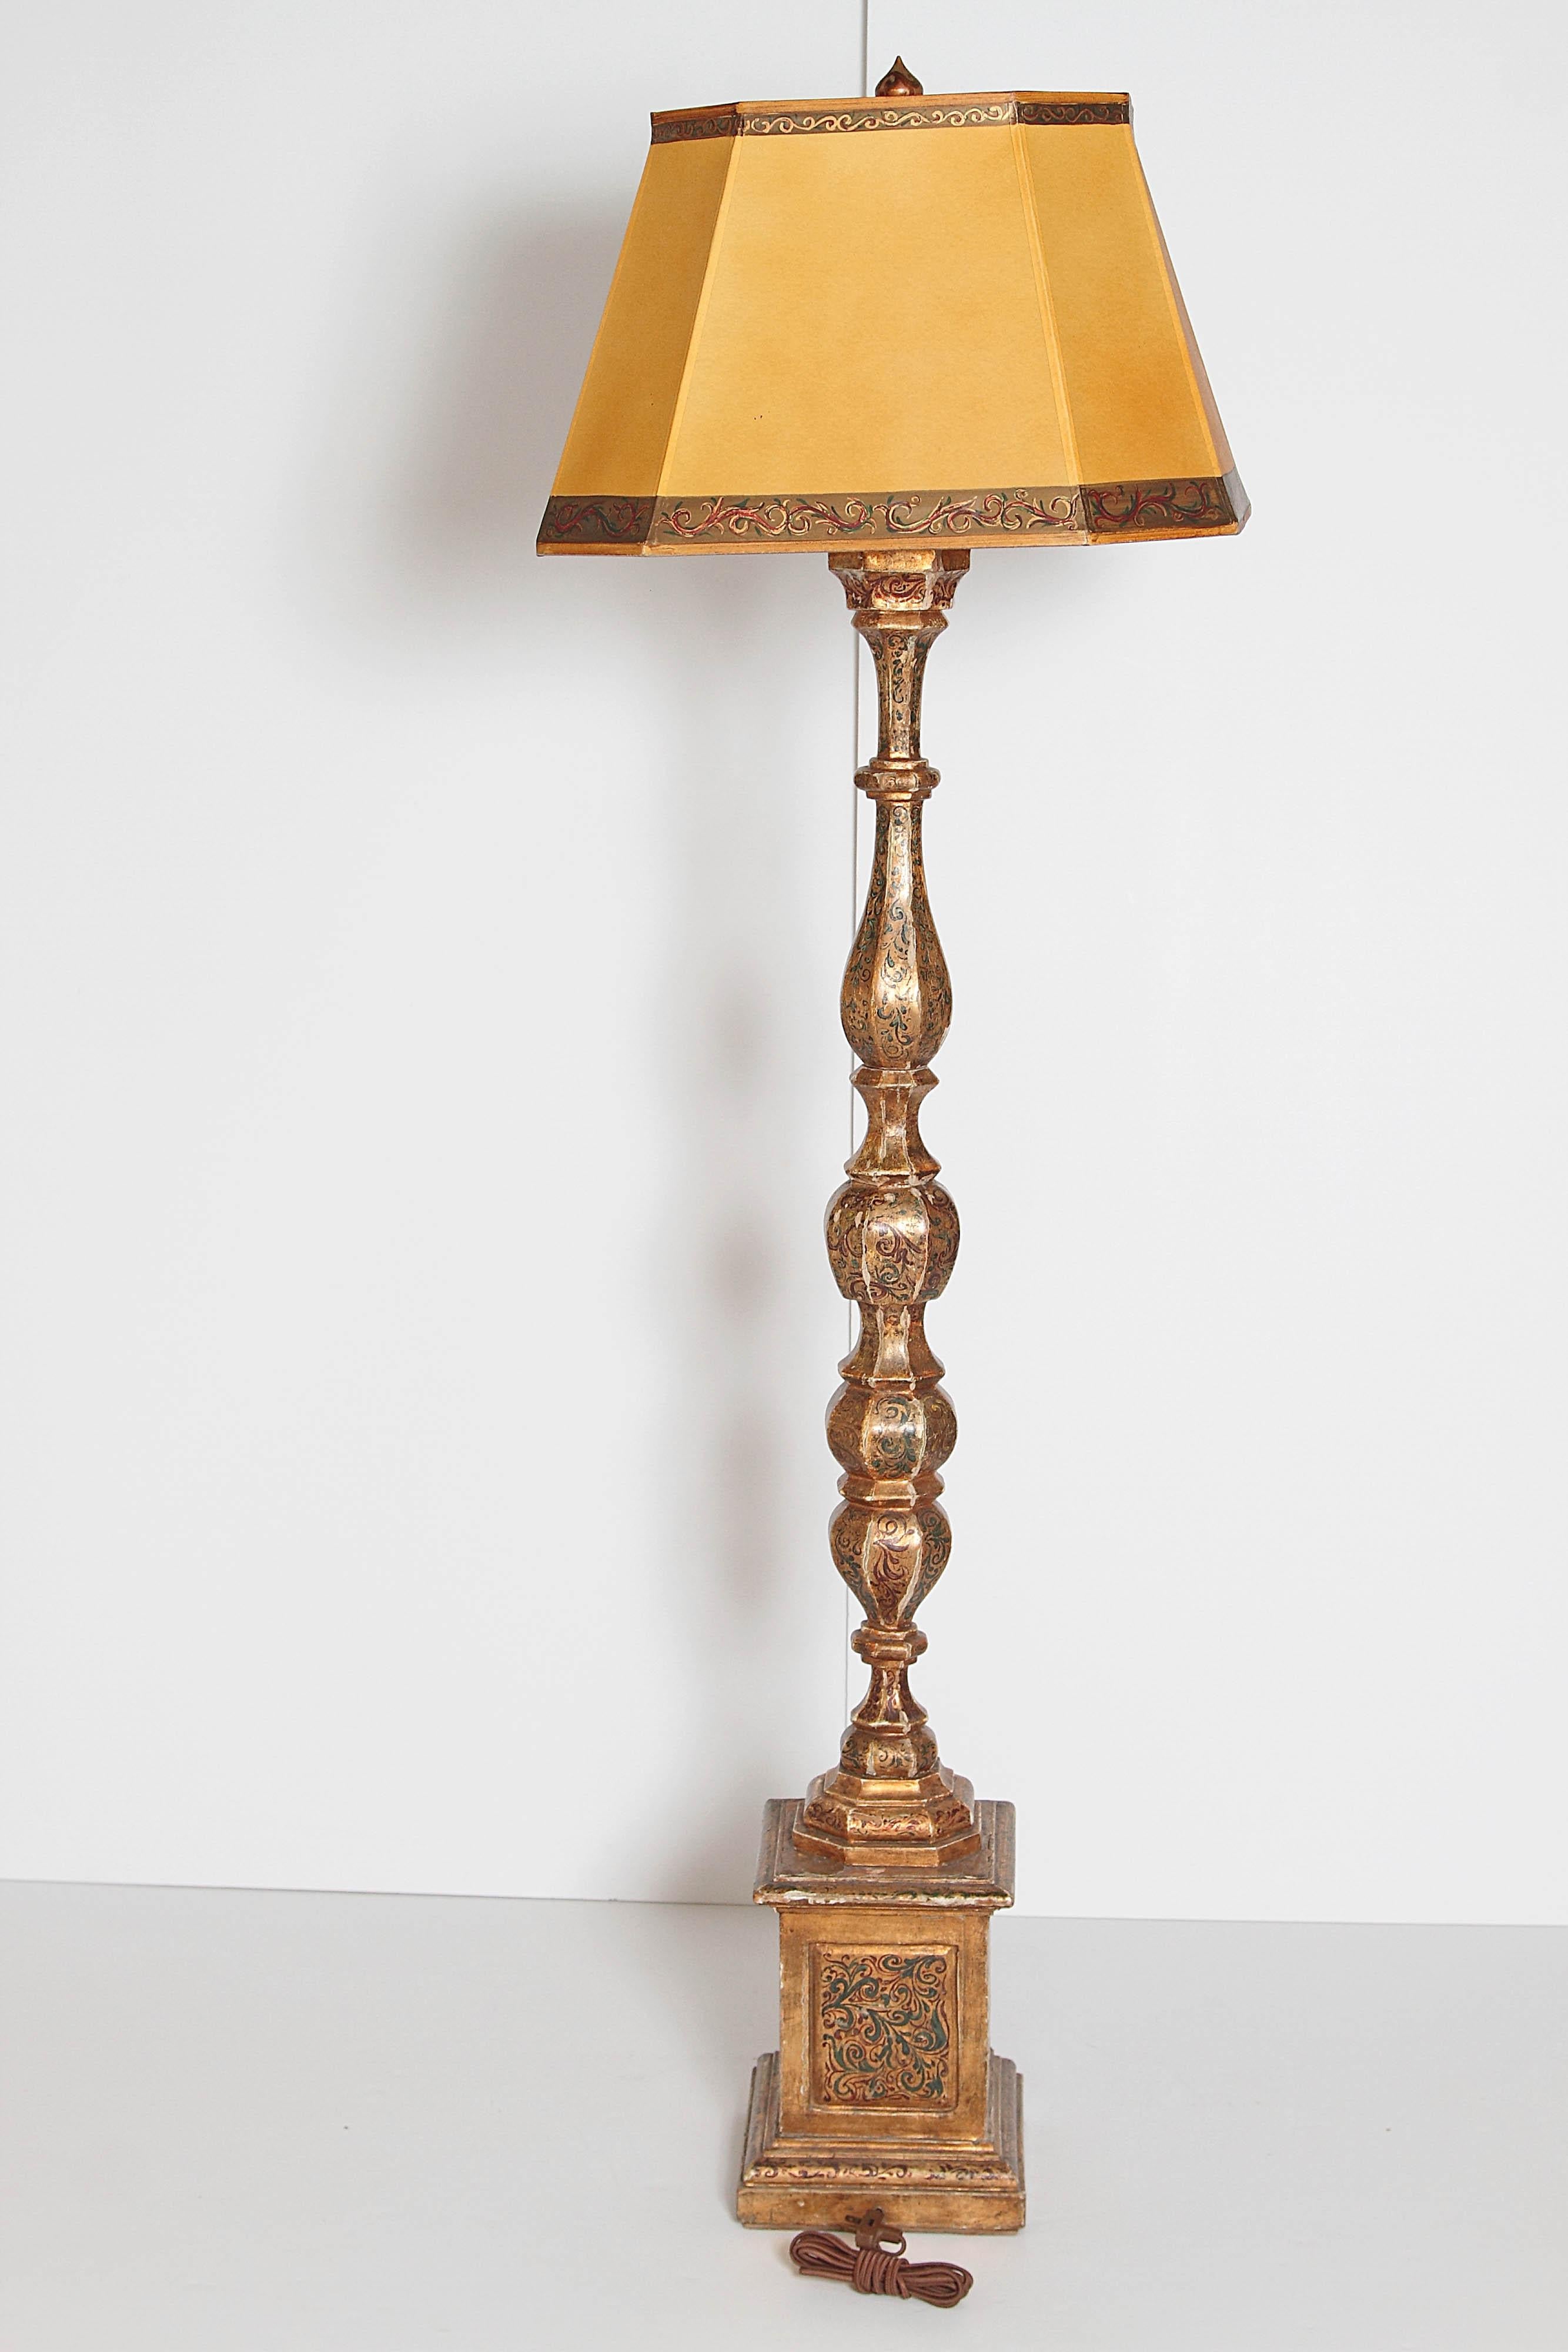 Italian Renaissance Revival Floor Lamp 1